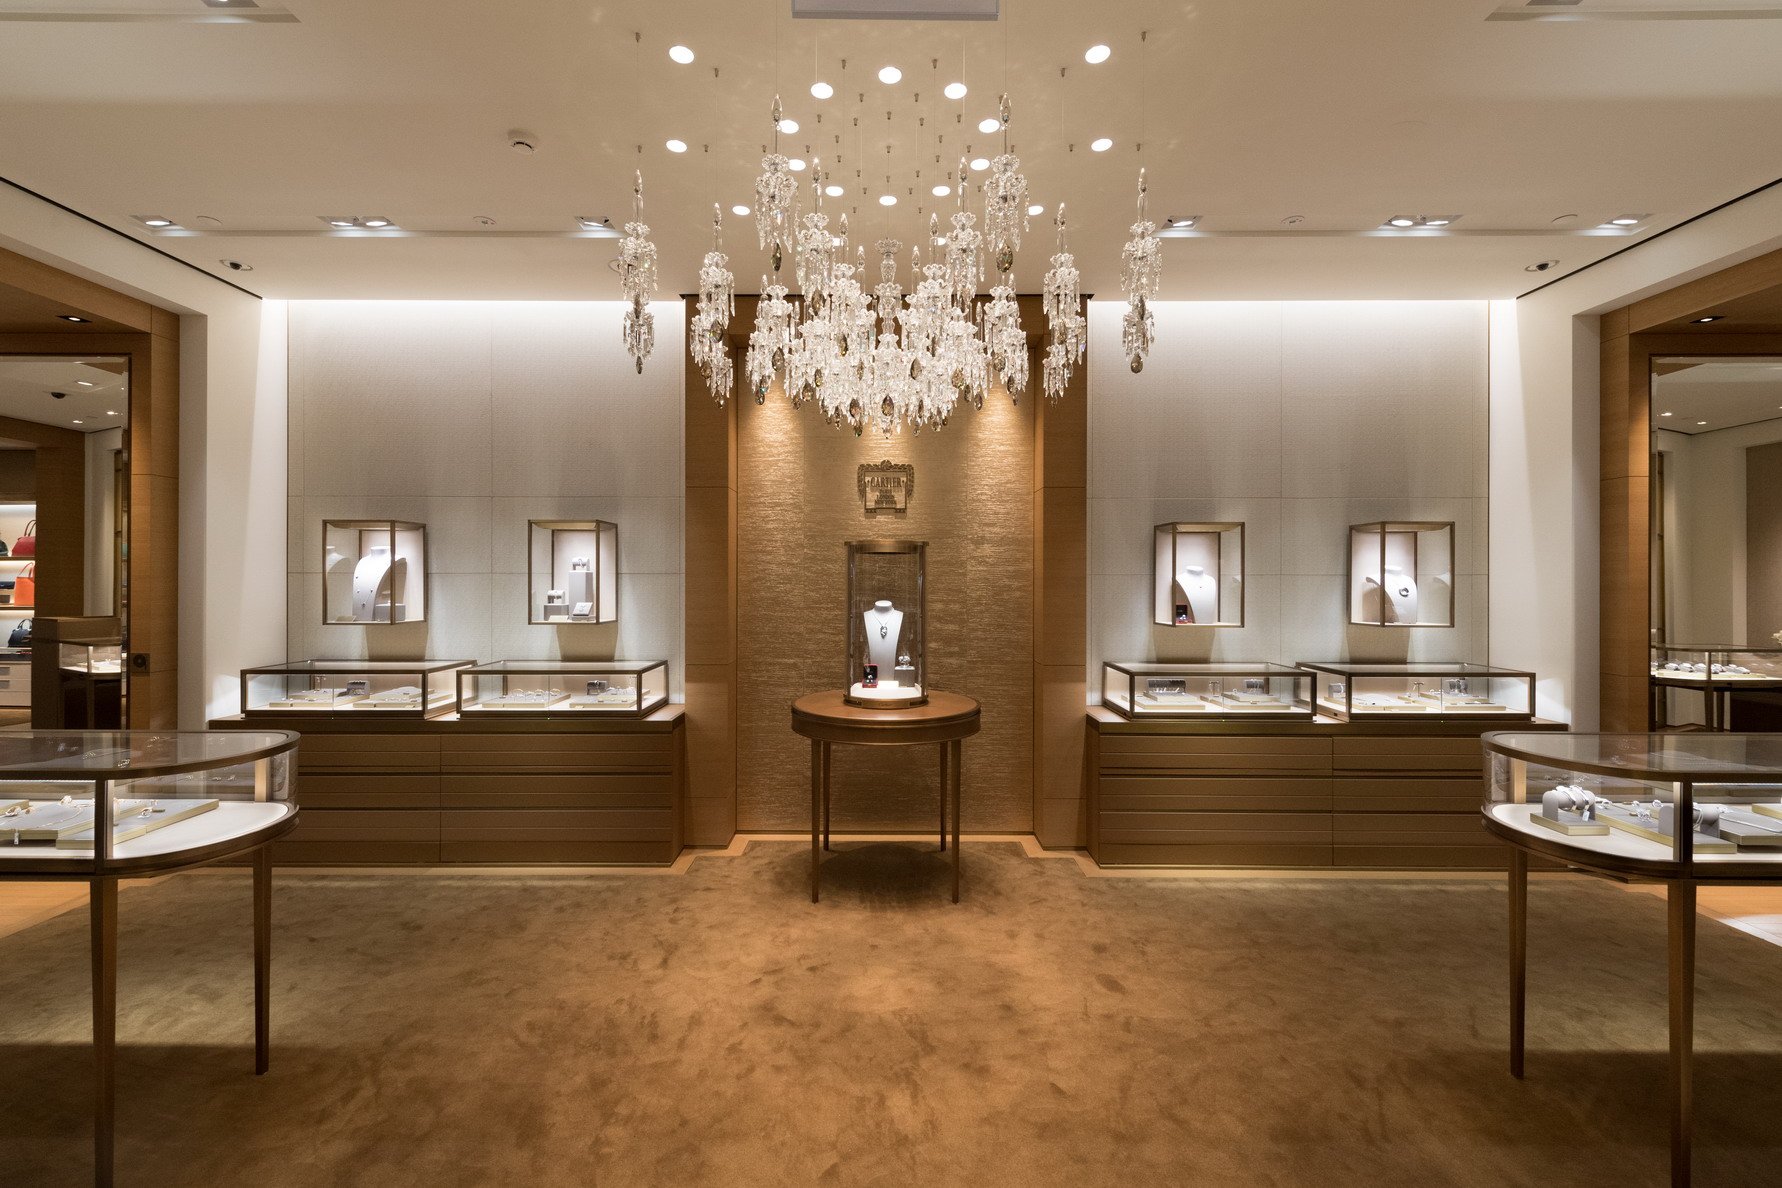 Cartier Store Decoration-2  Jewelry store design, Store design